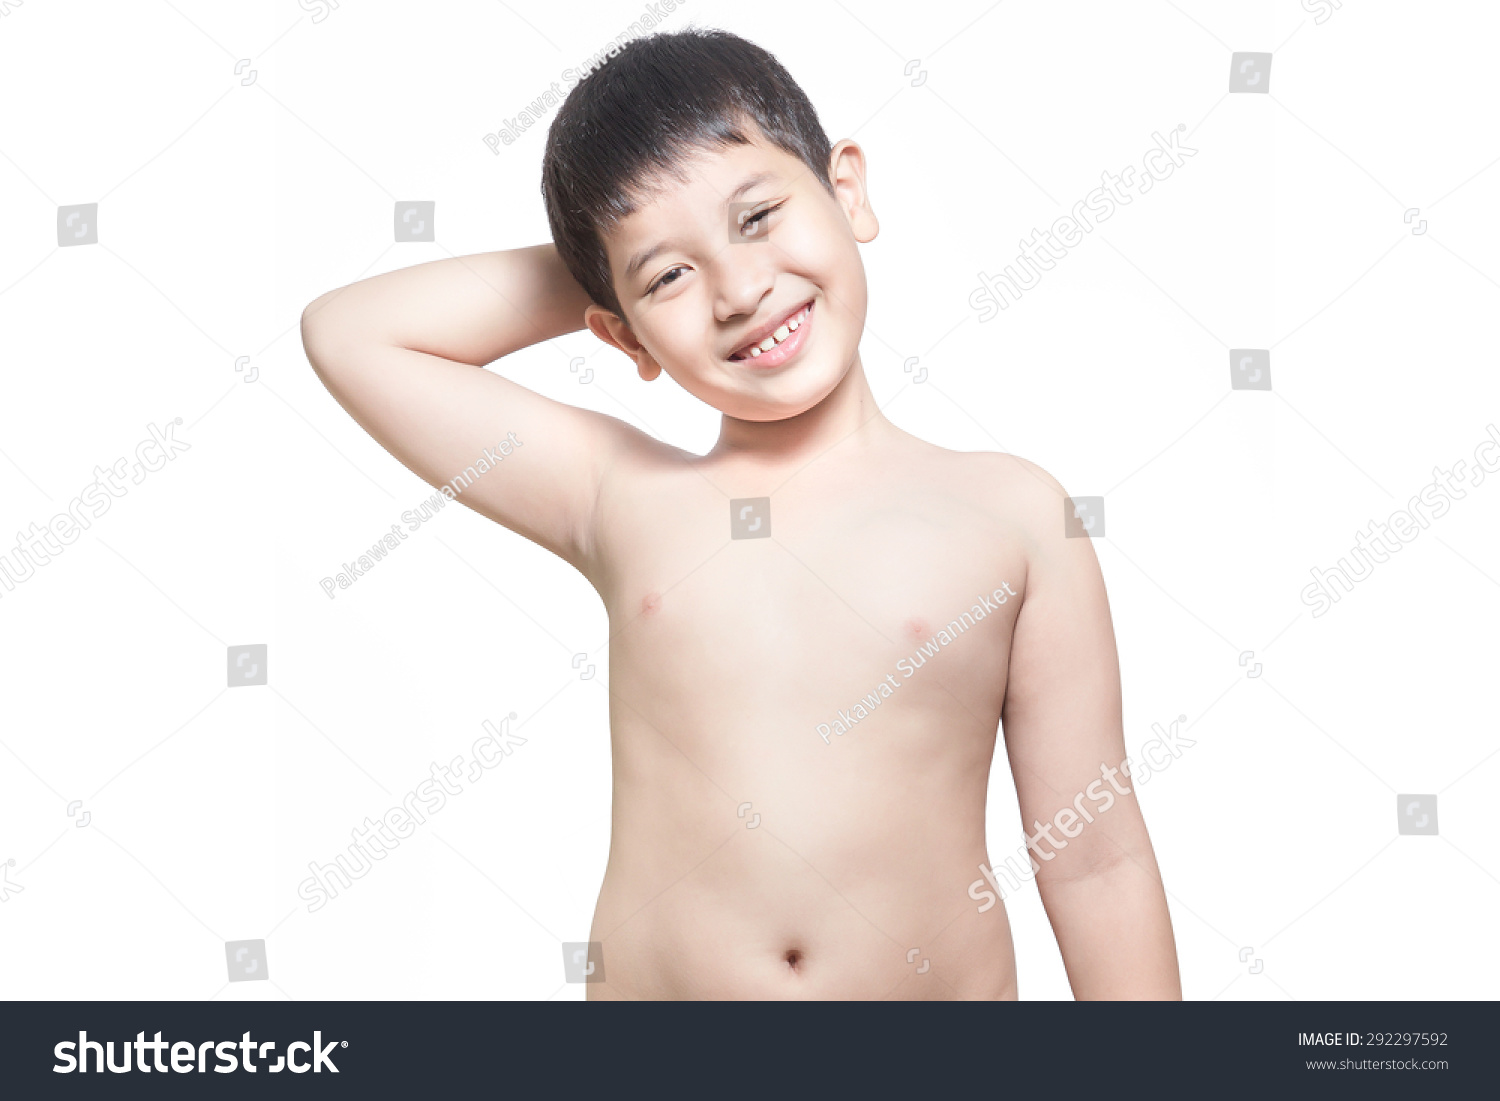 Small Boy Nude